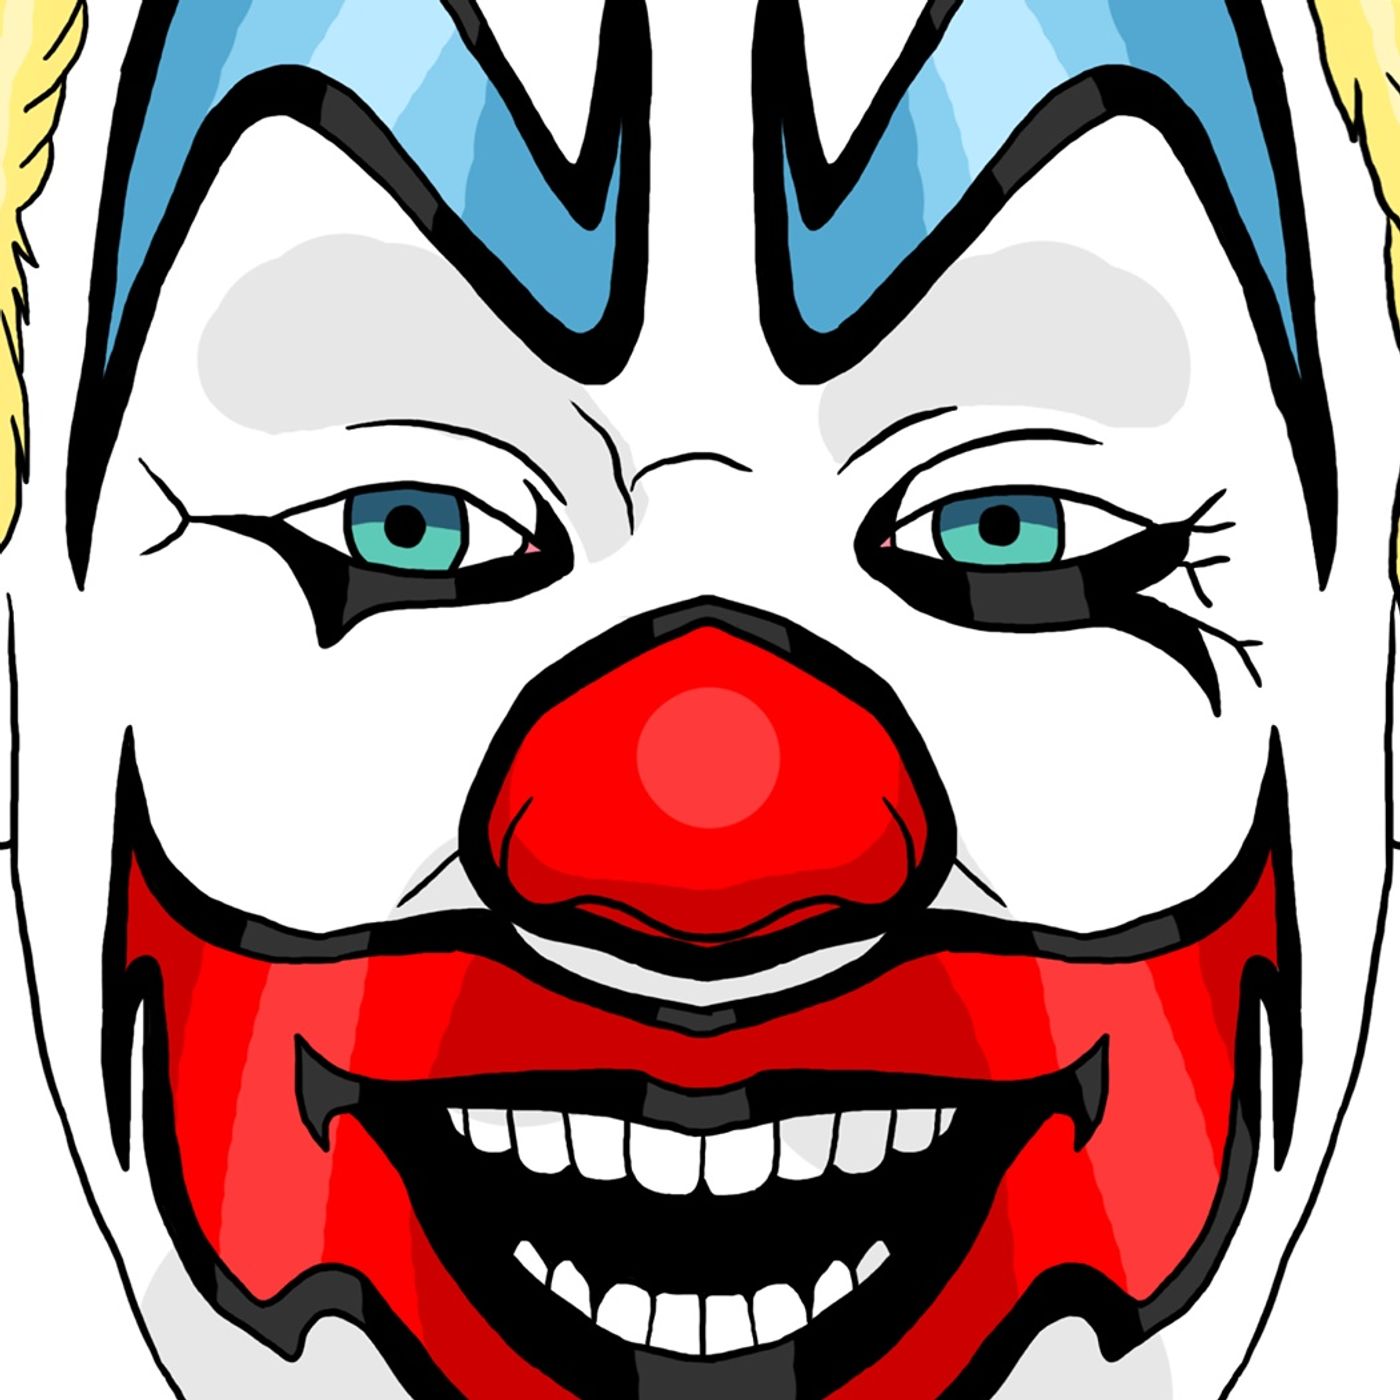 Flip Flop the Clown & King Irish Interview